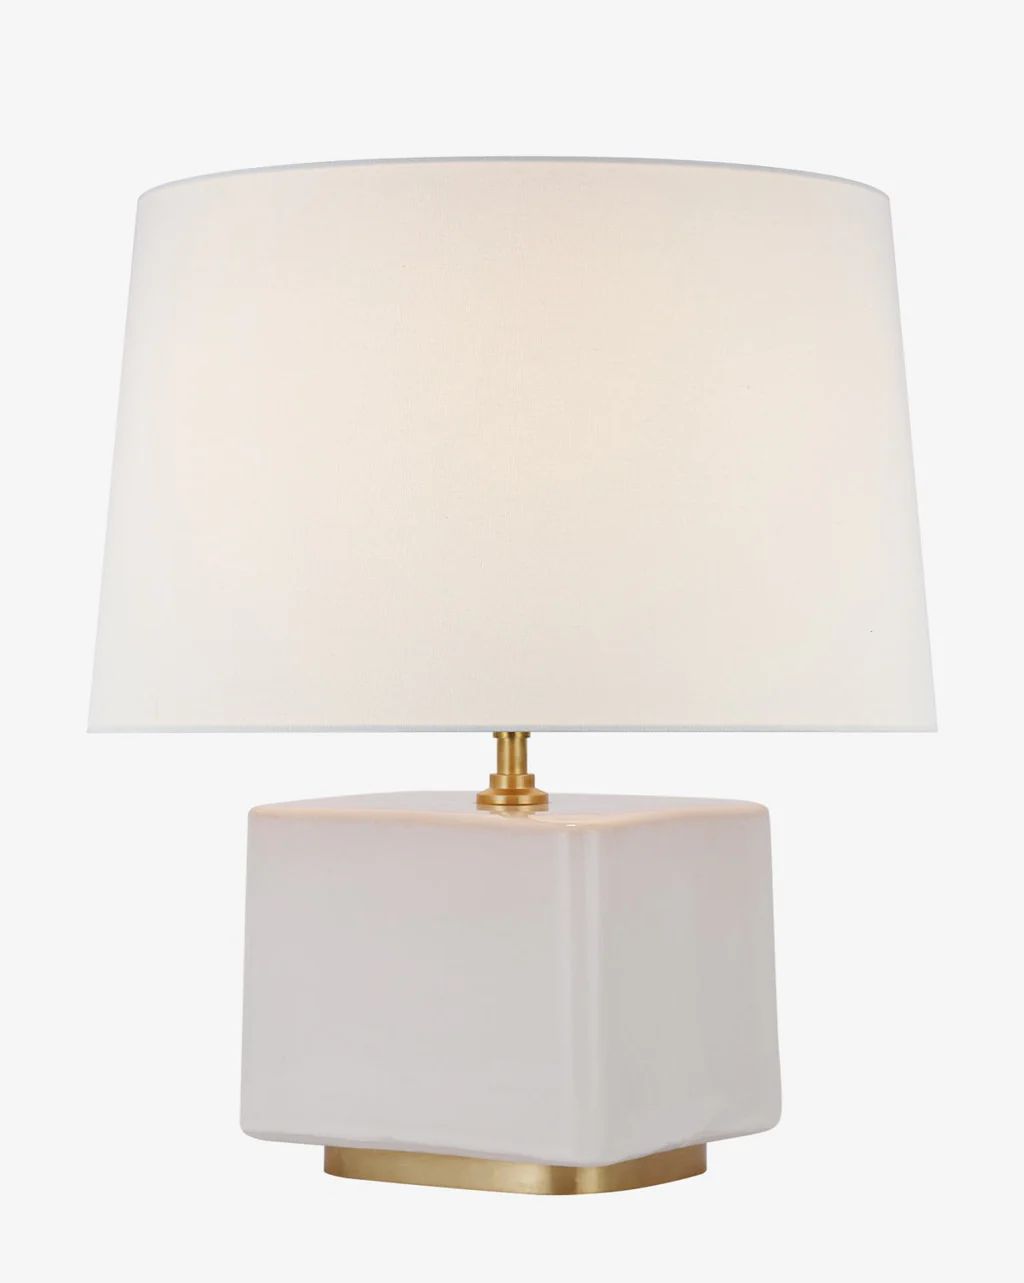 Toco Medium Table Lamp | McGee & Co.